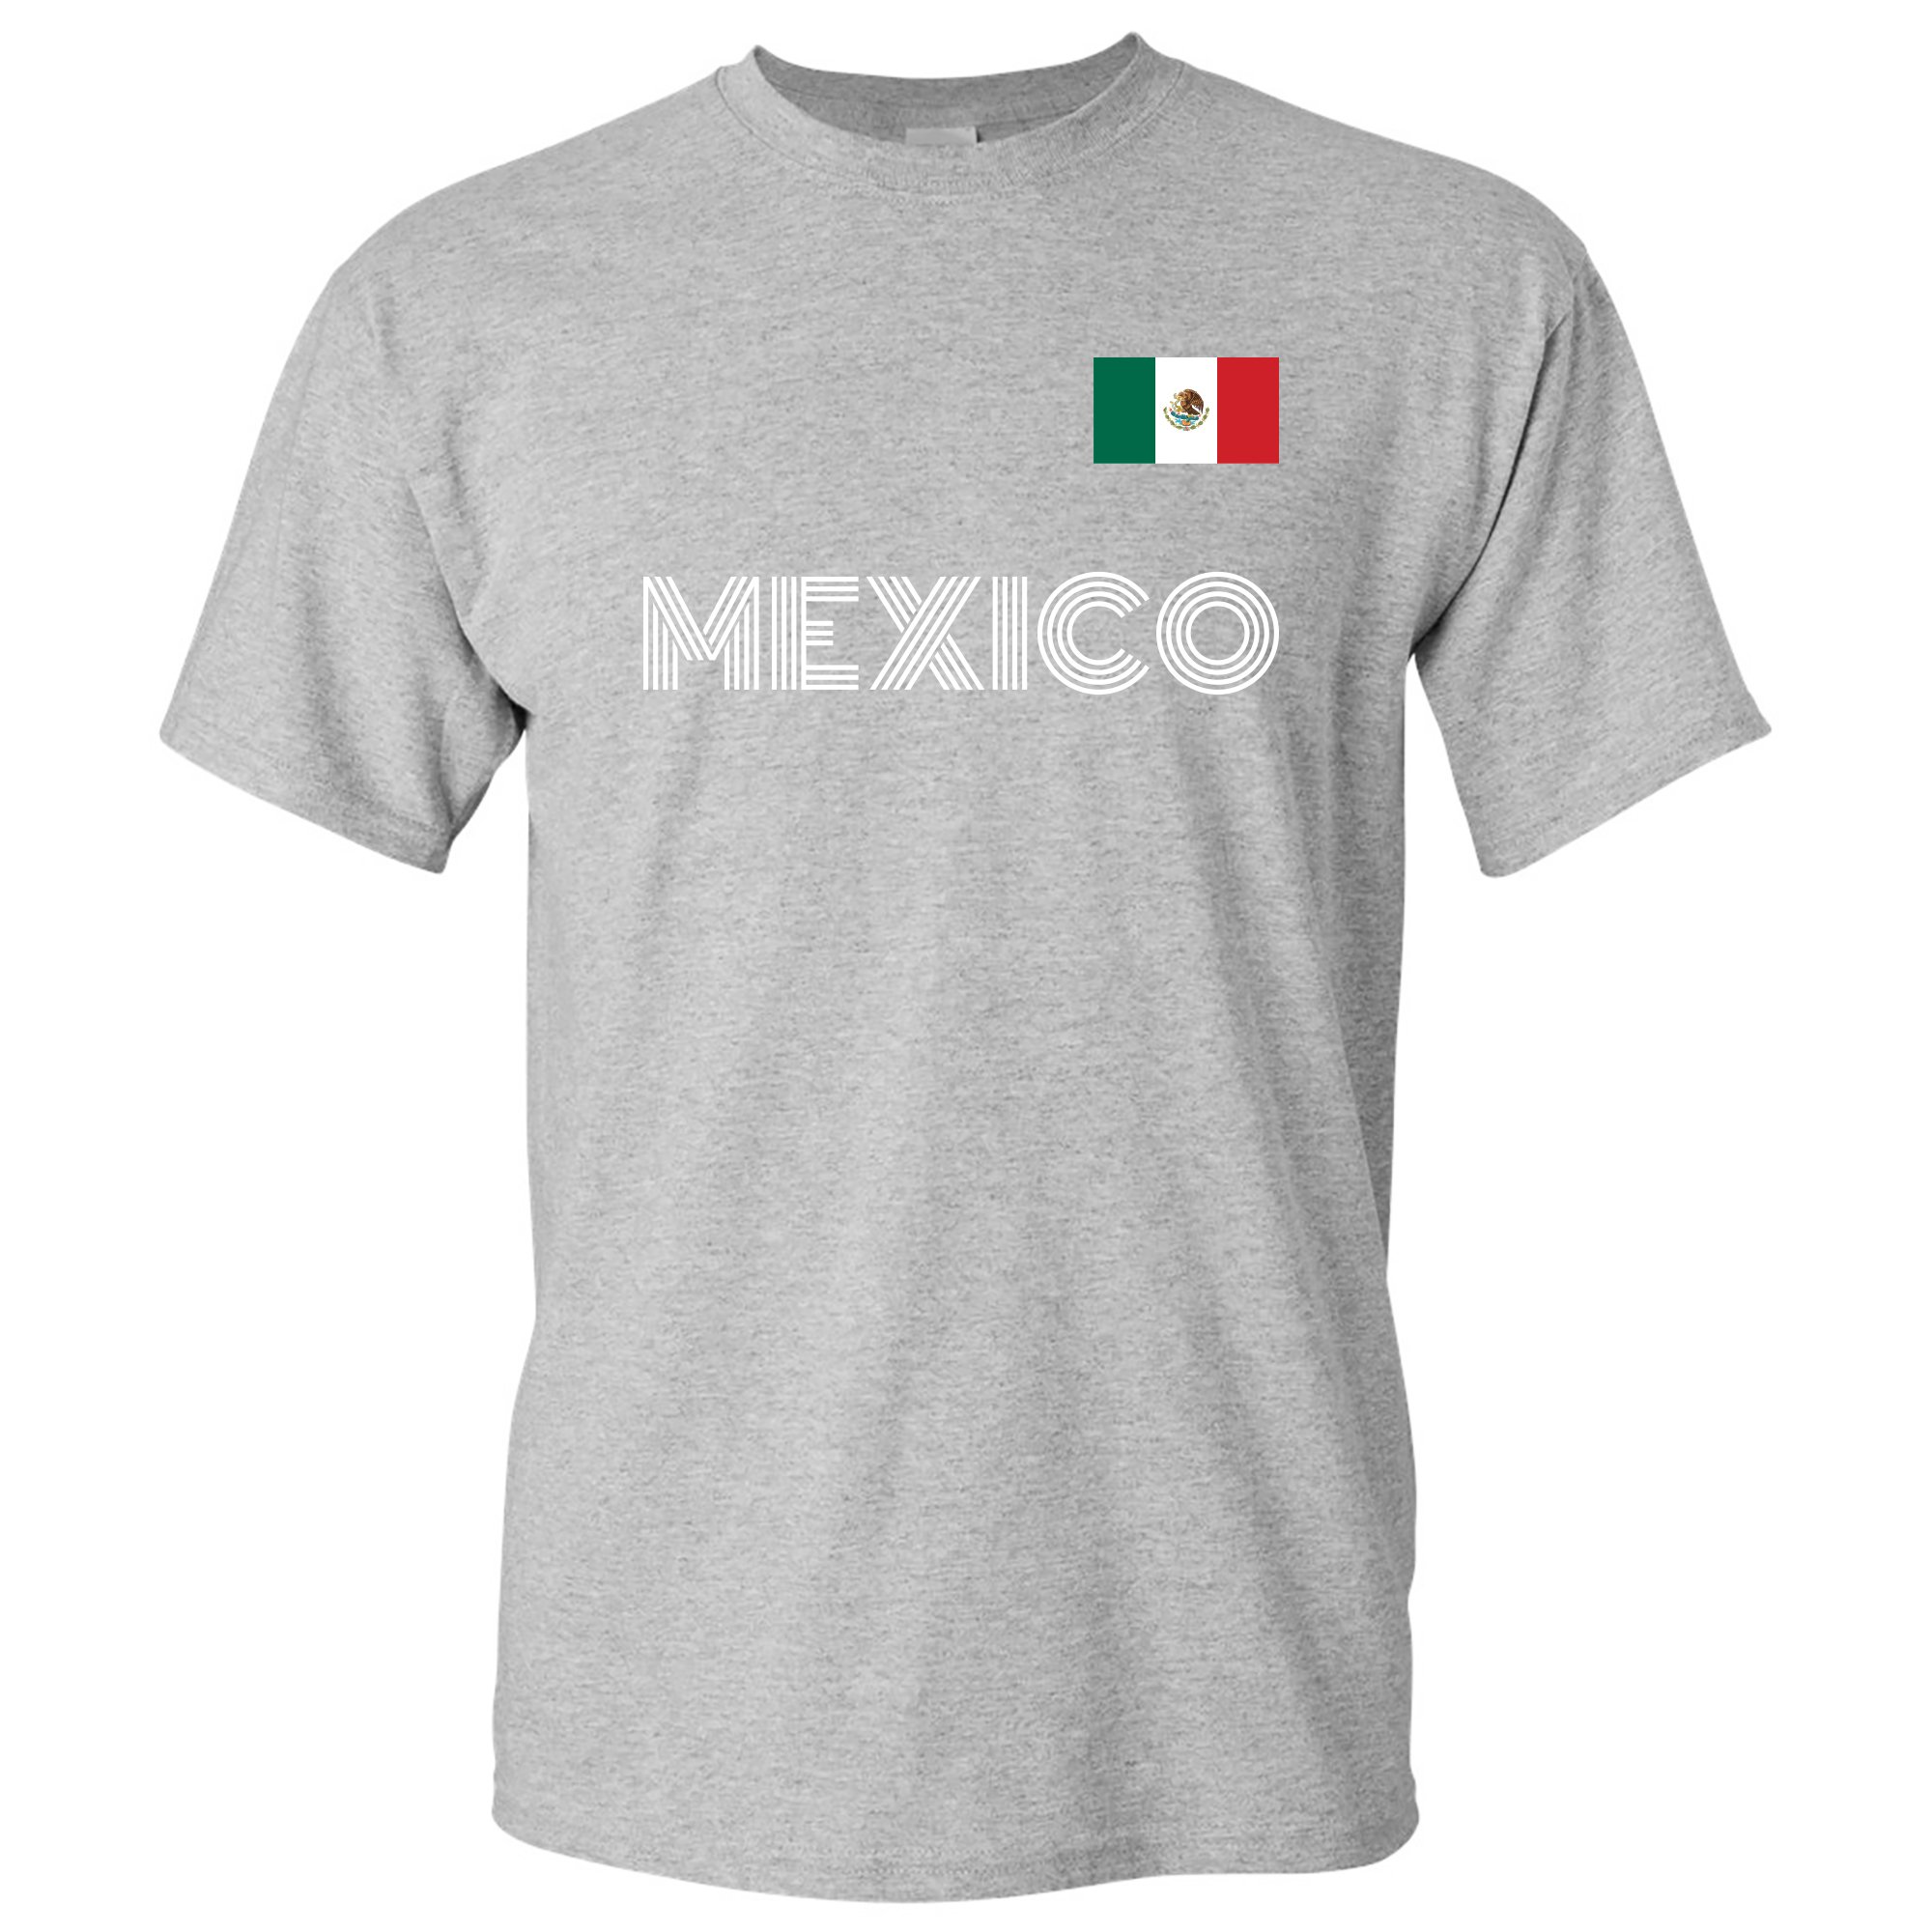 UGP Campus Apparel Mexico Soccer Jersey - Mexican International Futbol Team T Shirt